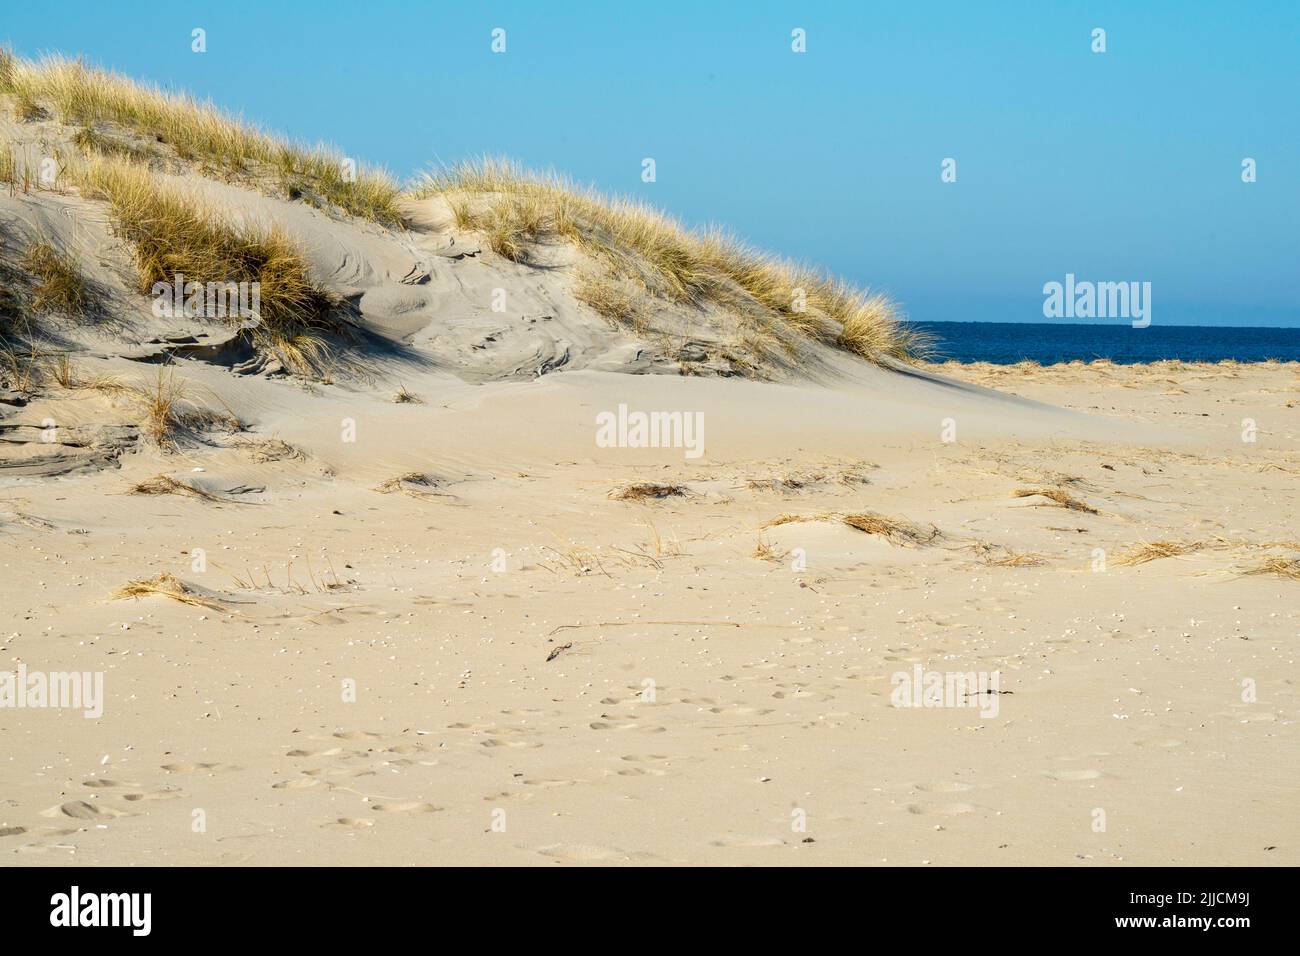 Sand dunes on the island of Rømø in Denmark Stock Photo